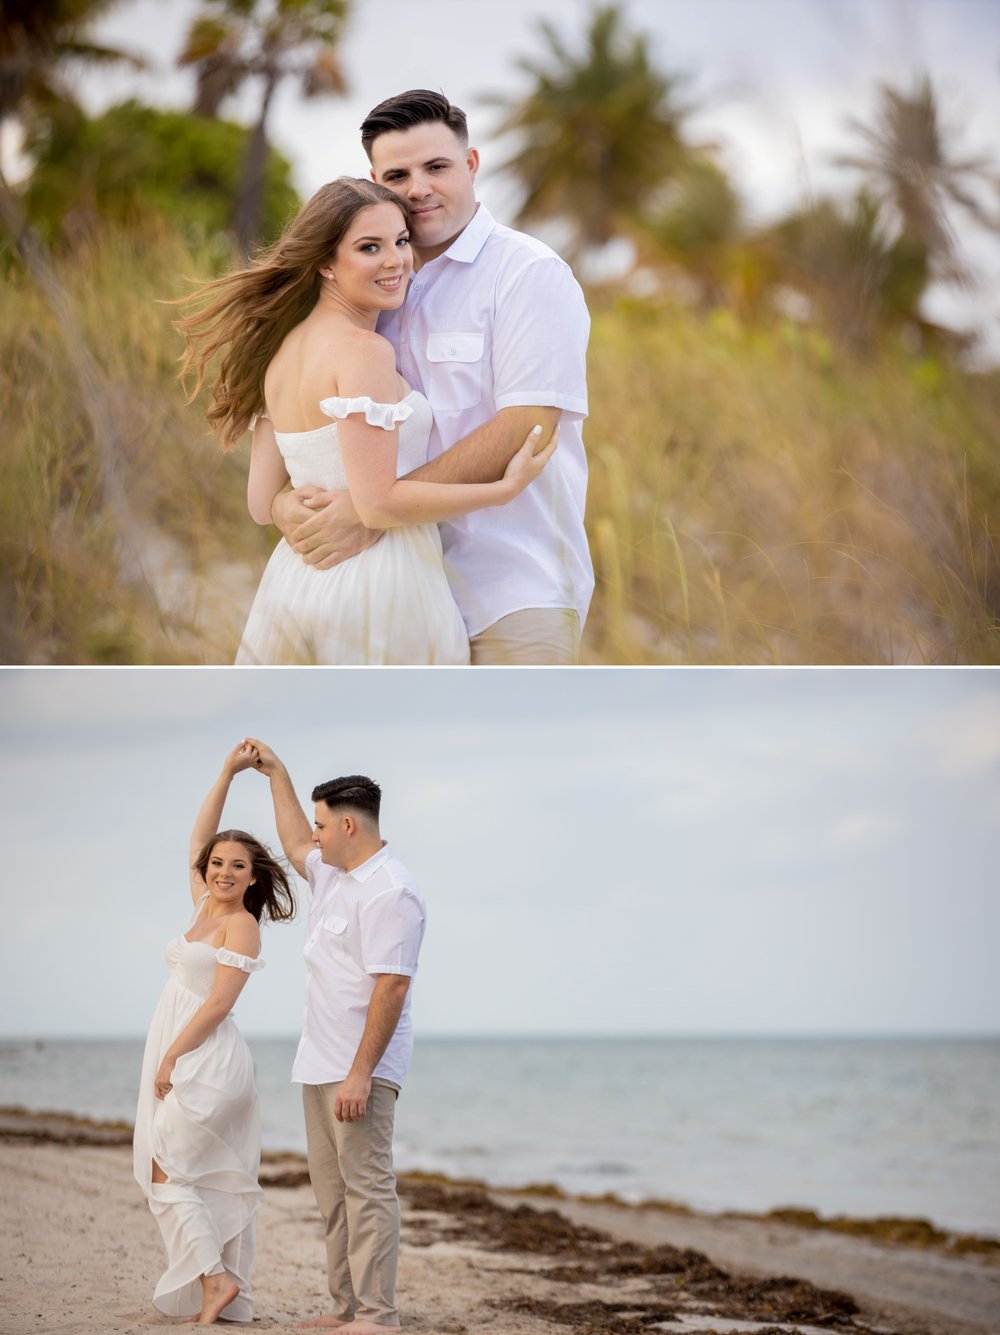 Engagement Session at Crandon Park - Miami Wedding Photographers - Santy Martinez 9.jpg